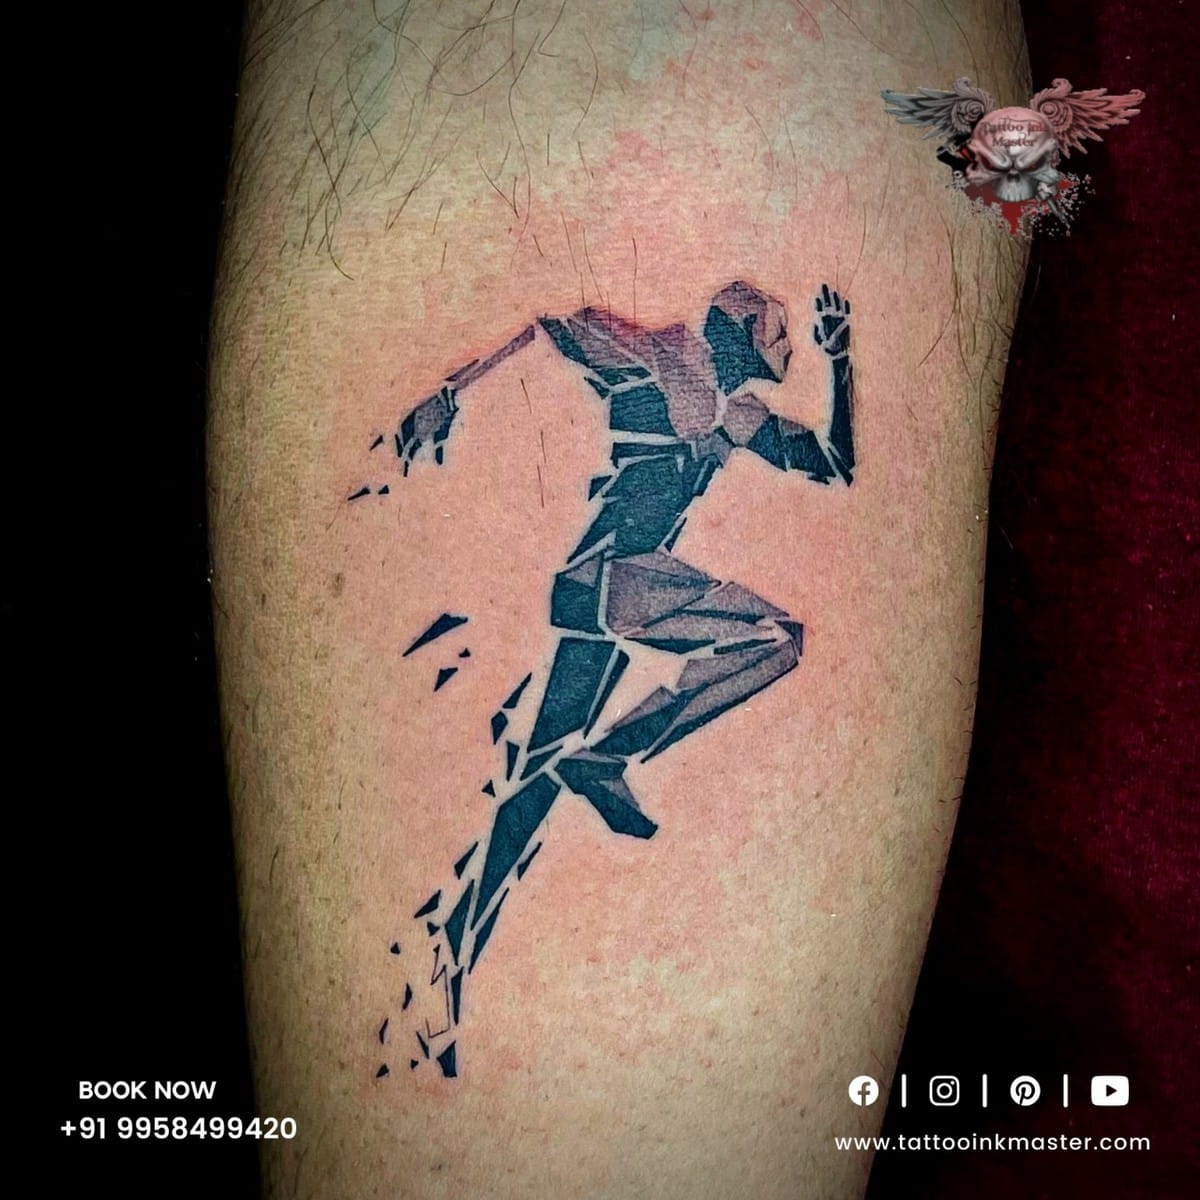 Run tattoo | Running tattoo, Running girl tattoos, Runner tattoo